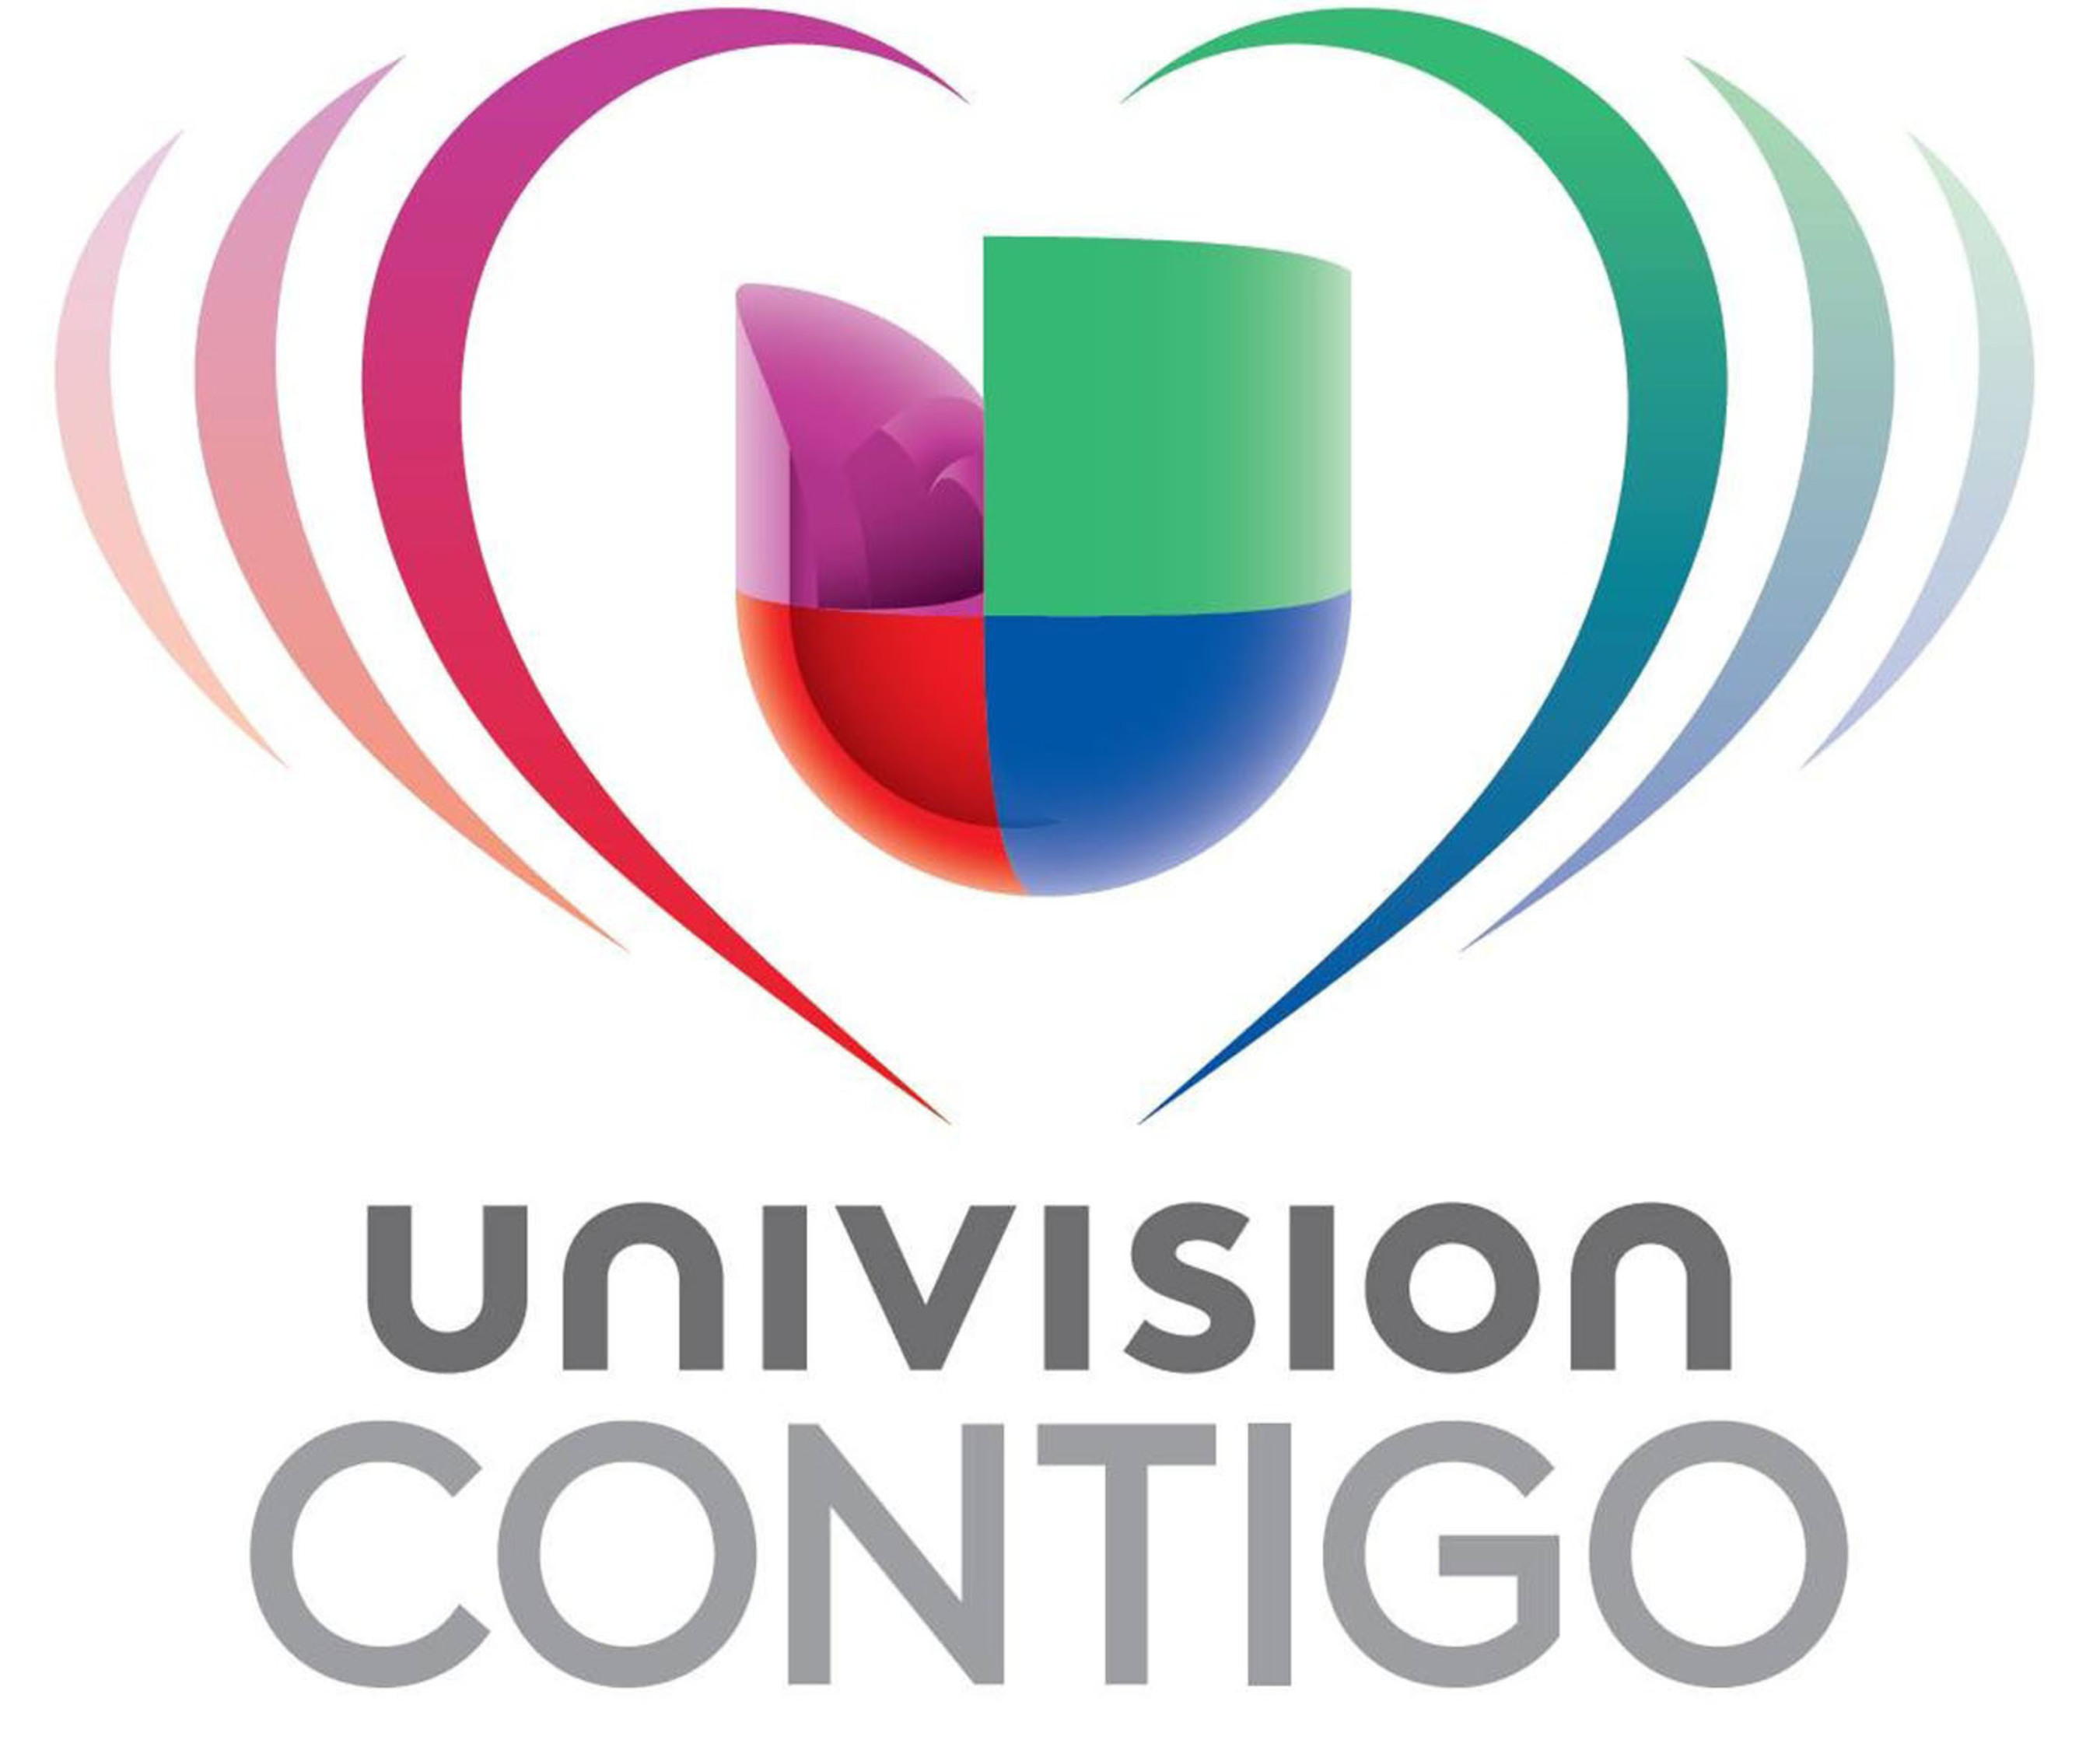 Univision Contigo Logo. (PRNewsFoto/Univision) (PRNewsFoto/UNIVISION) (PRNewsFoto/UNIVISION)